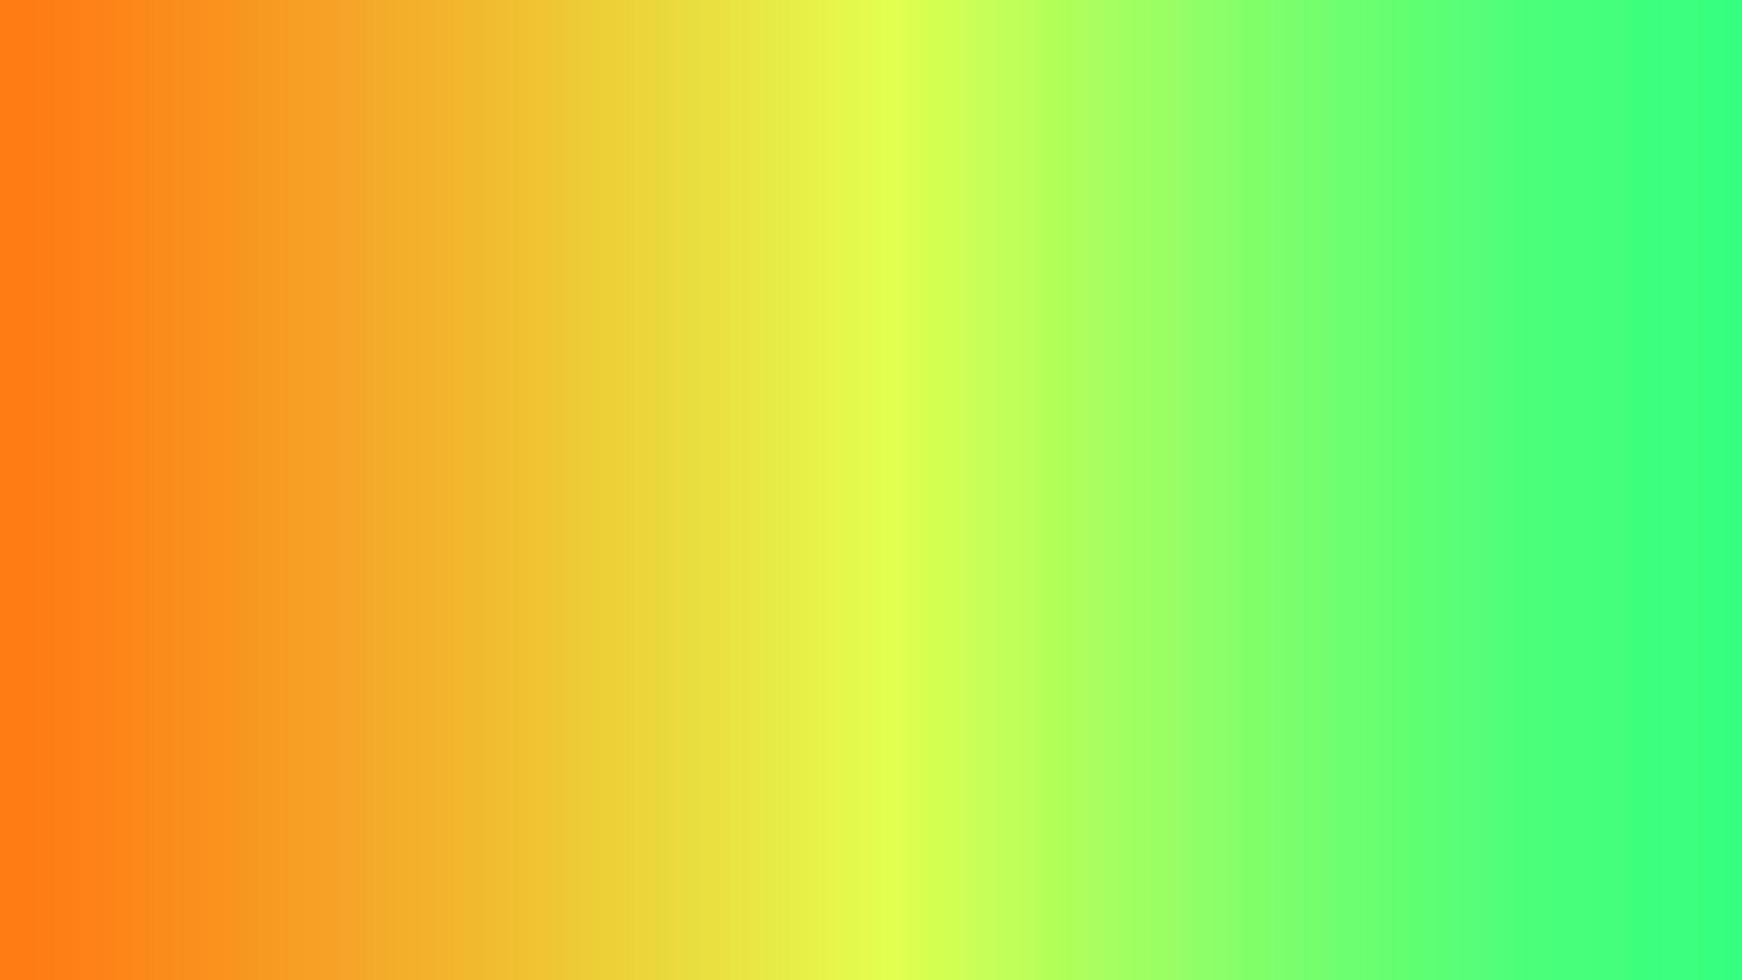 fondo degradado abstracto naranja, amarillo, verde perfecto para diseño, papel tapiz, promoción, presentación, sitio web, banner, etc. fondo de ilustración vector